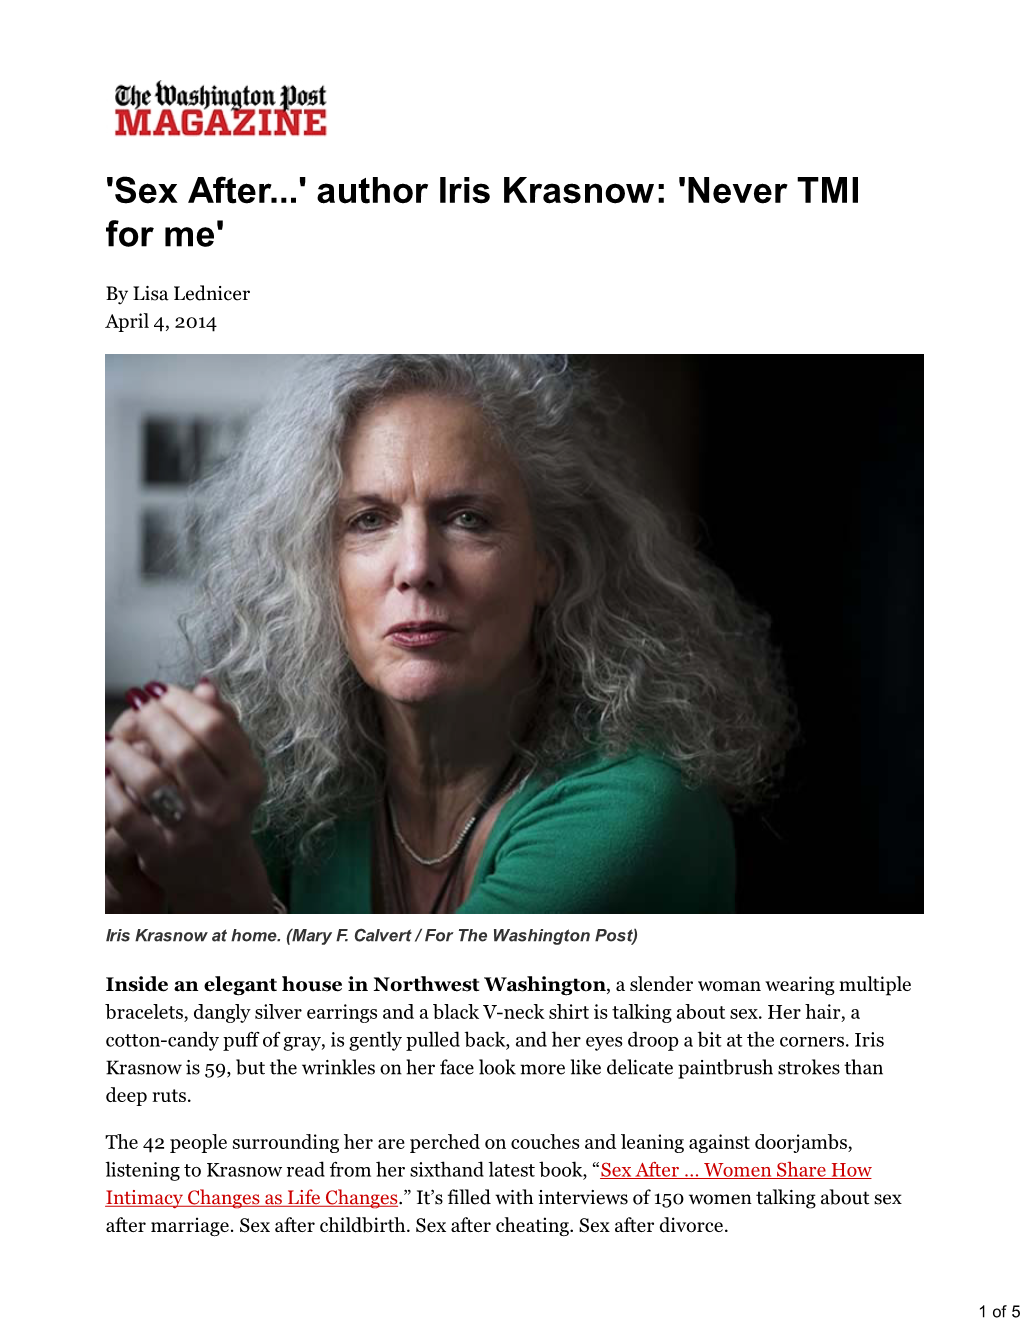 Washington Post Magazine | 'Sex After...' Author Iris Krasnow: 'Never TMI